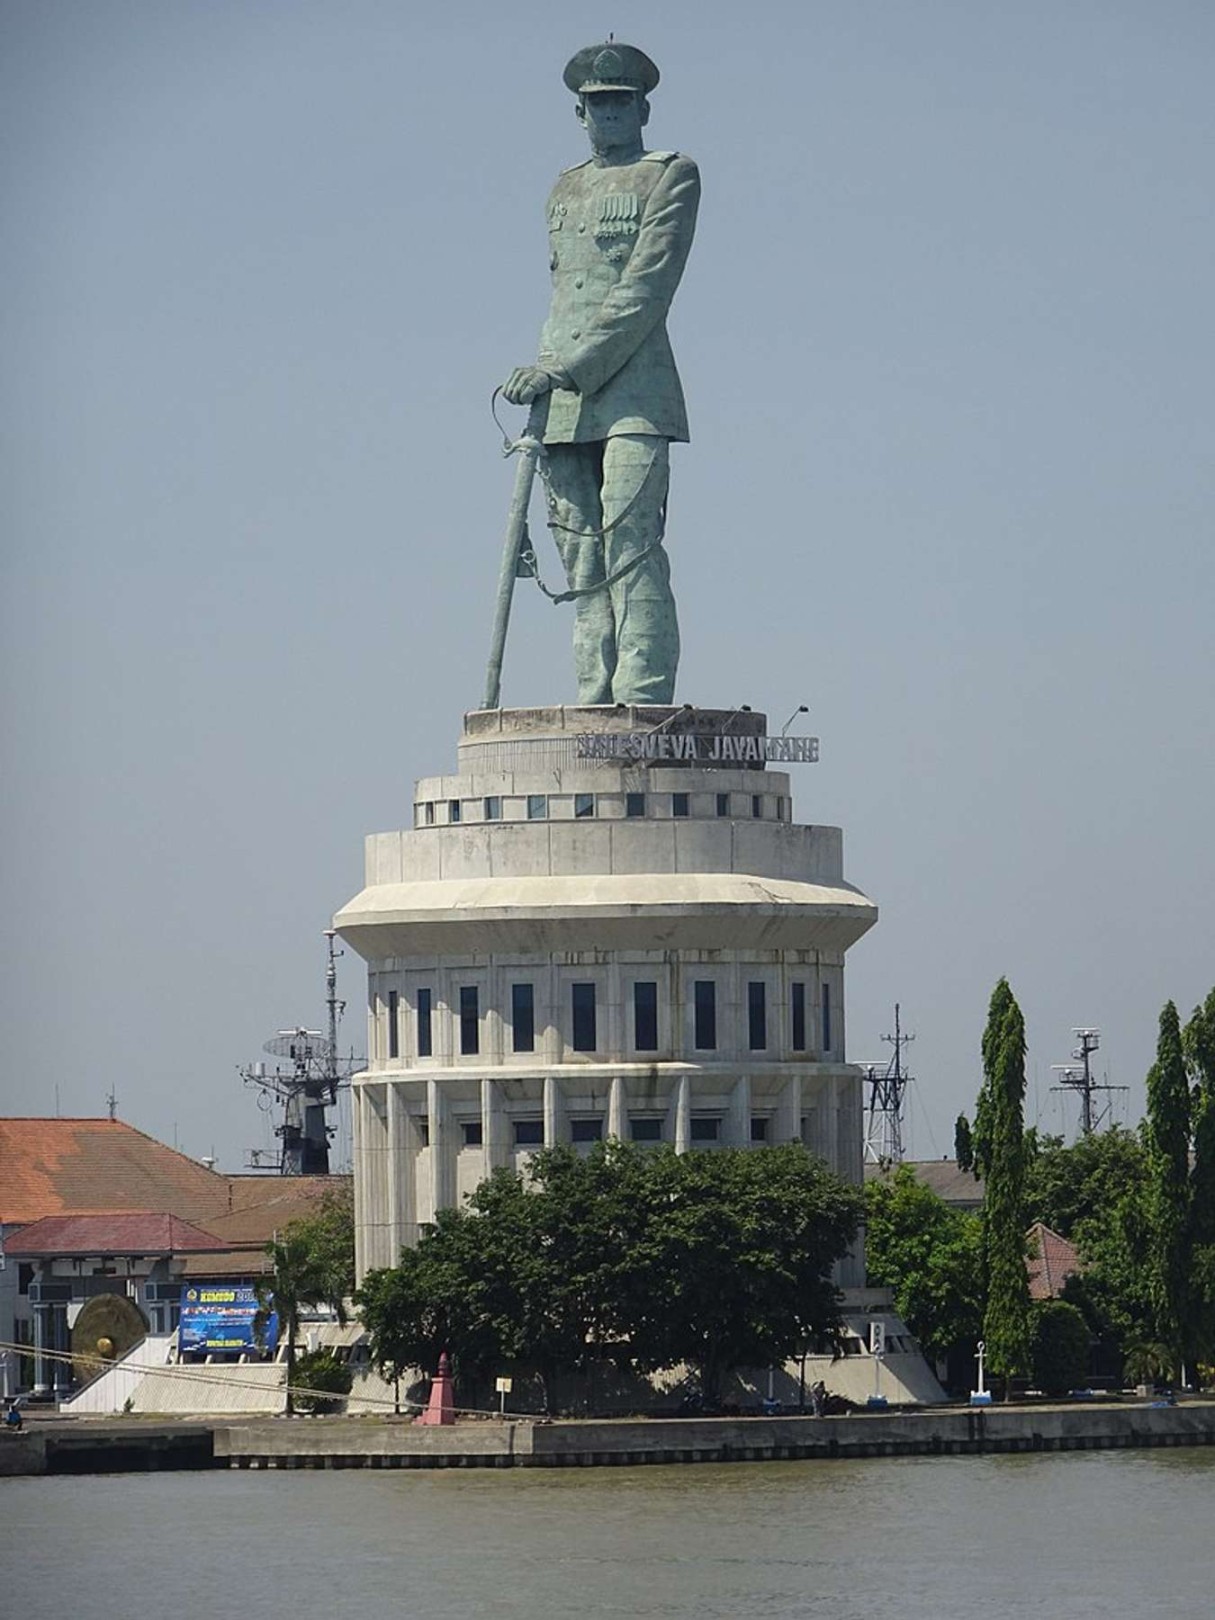 Patung Ikonik di Indonesia Paling Terkenal